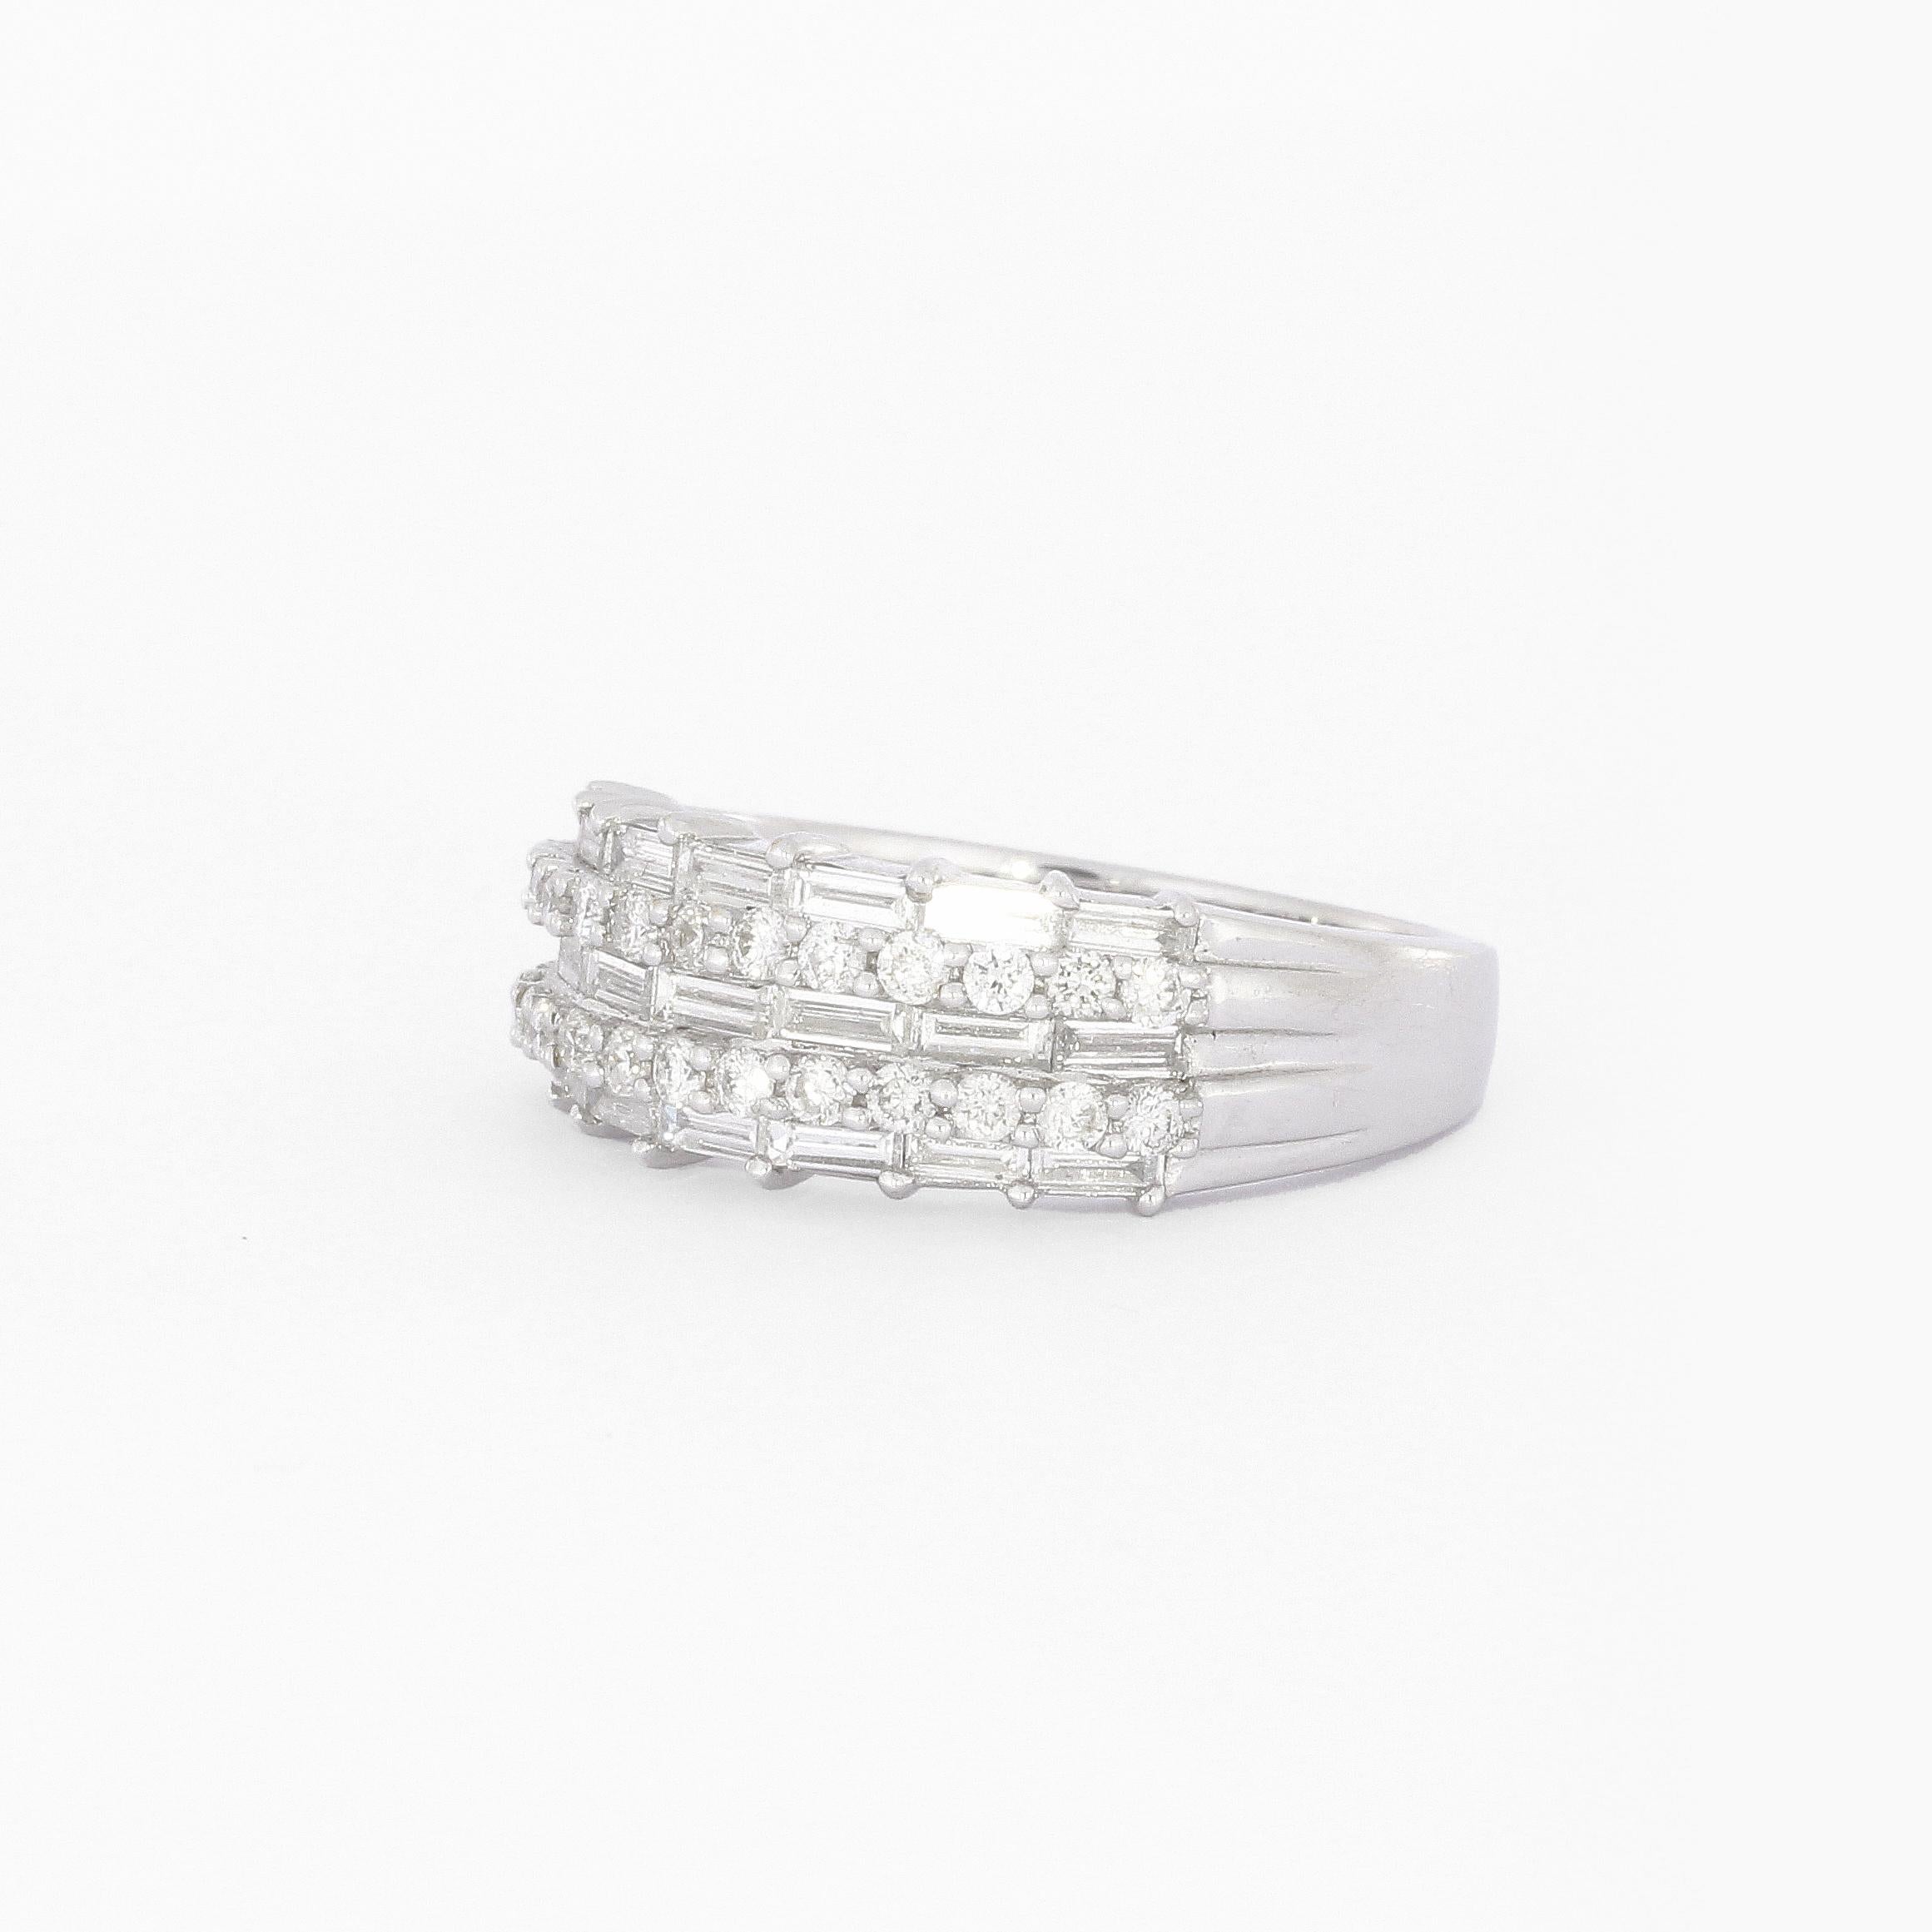 Baguette Diamond Half Eternity Ring In 18k White Gold
21 Baguette Cut + 28 Brilliant Cut Diamonds approx. 0.8ct.
